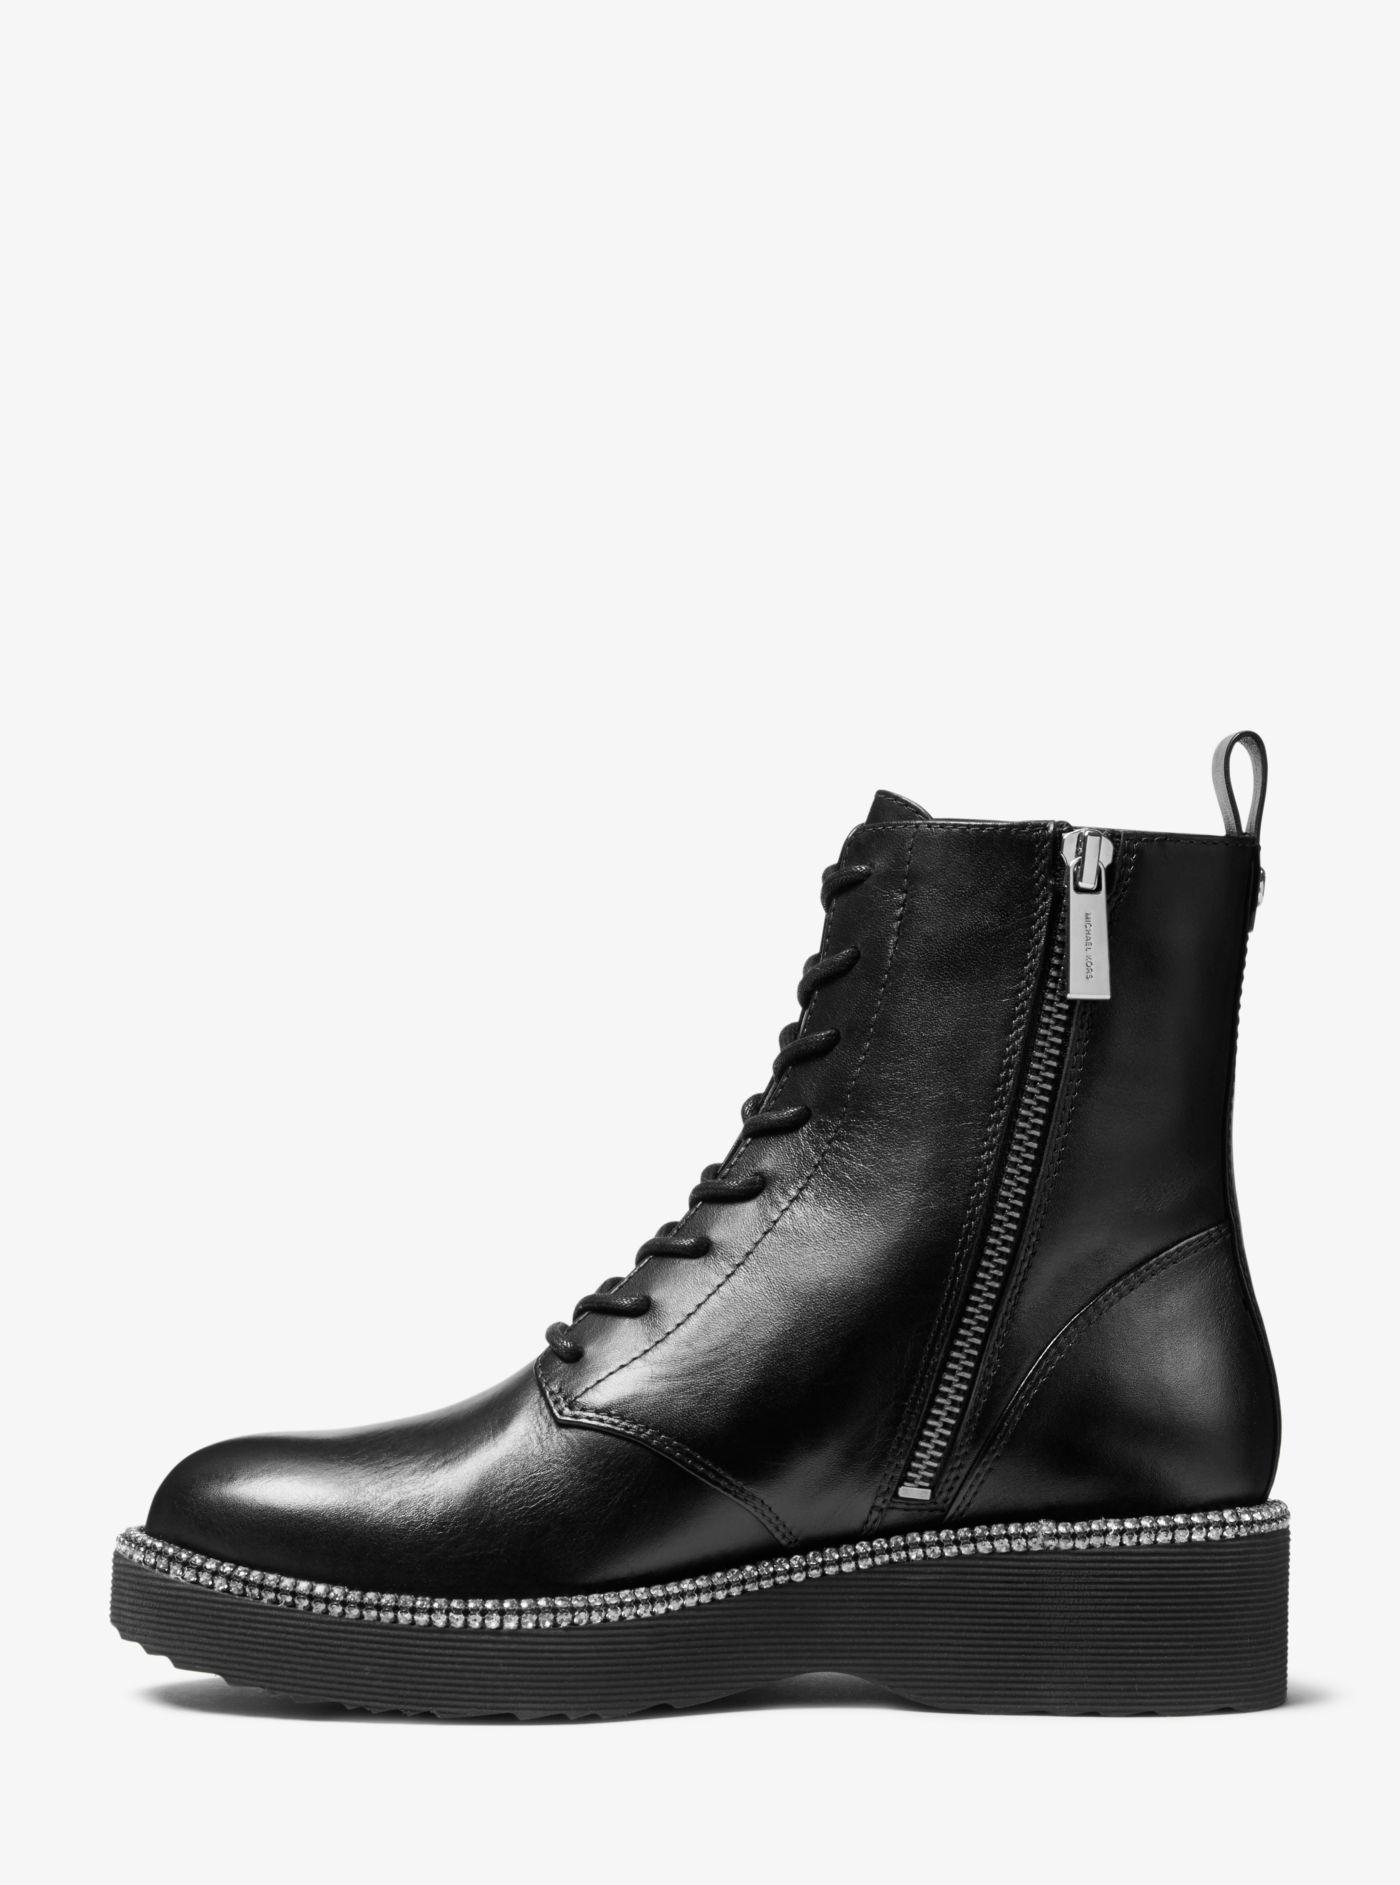 Michael Kors Tavie Leather Combat Boot in Black - Lyst